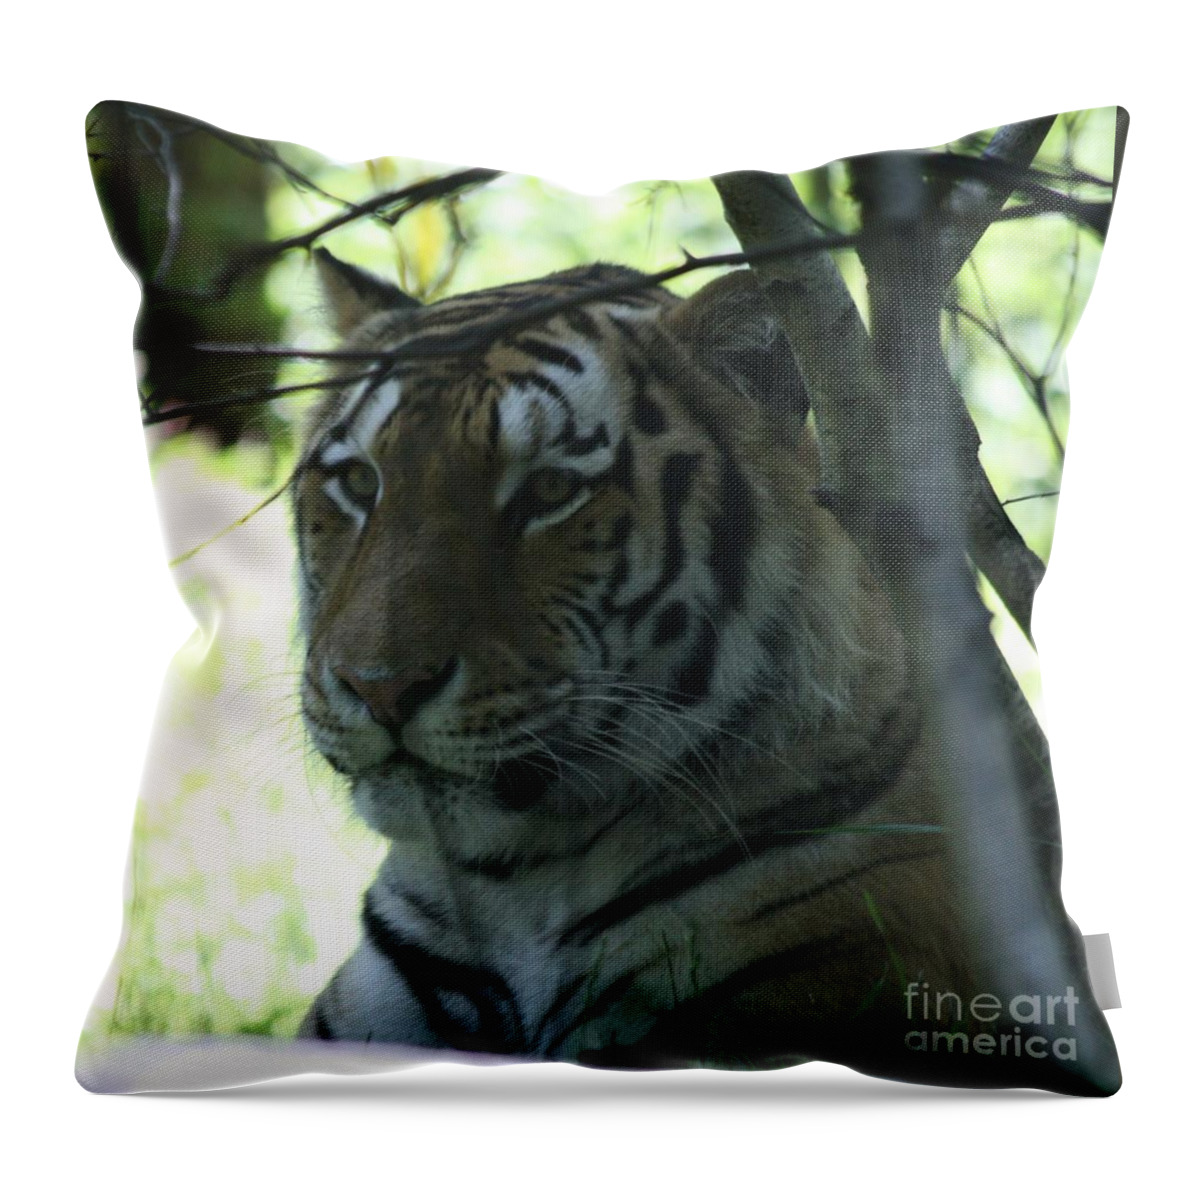 Siberian Tiger Profile Throw Pillow featuring the photograph Siberian Tiger Profile by John Telfer